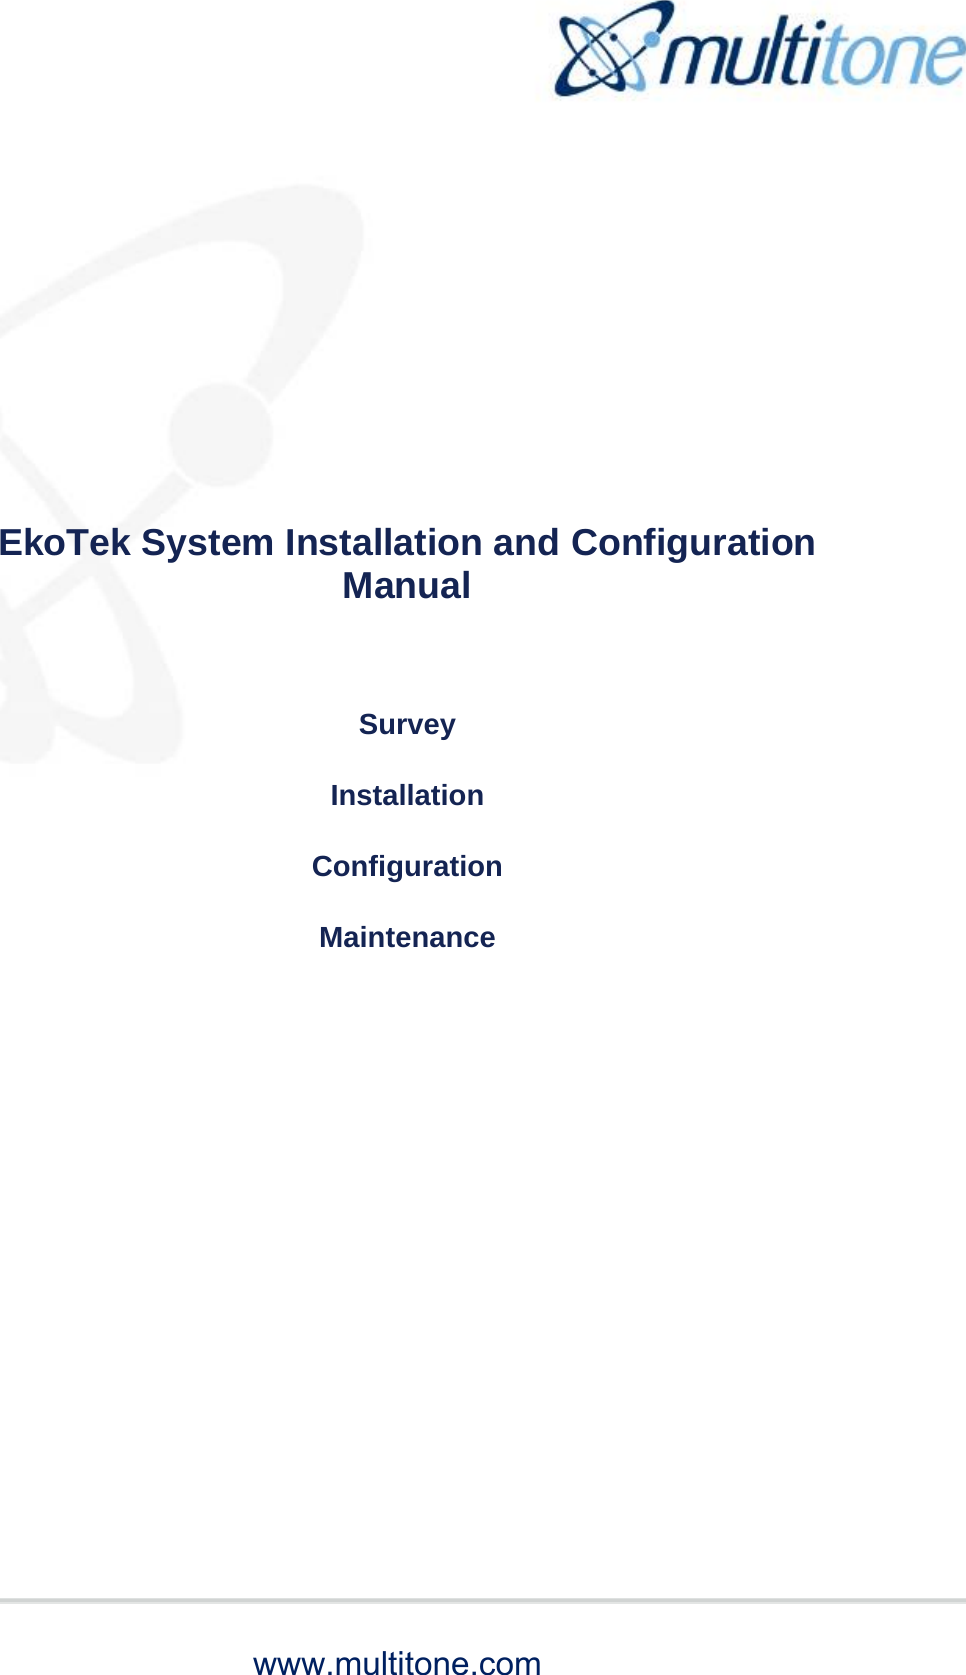   www.multitone.com EkoTek System Installation and Configuration Manual  Survey Installation Configuration Maintenance     